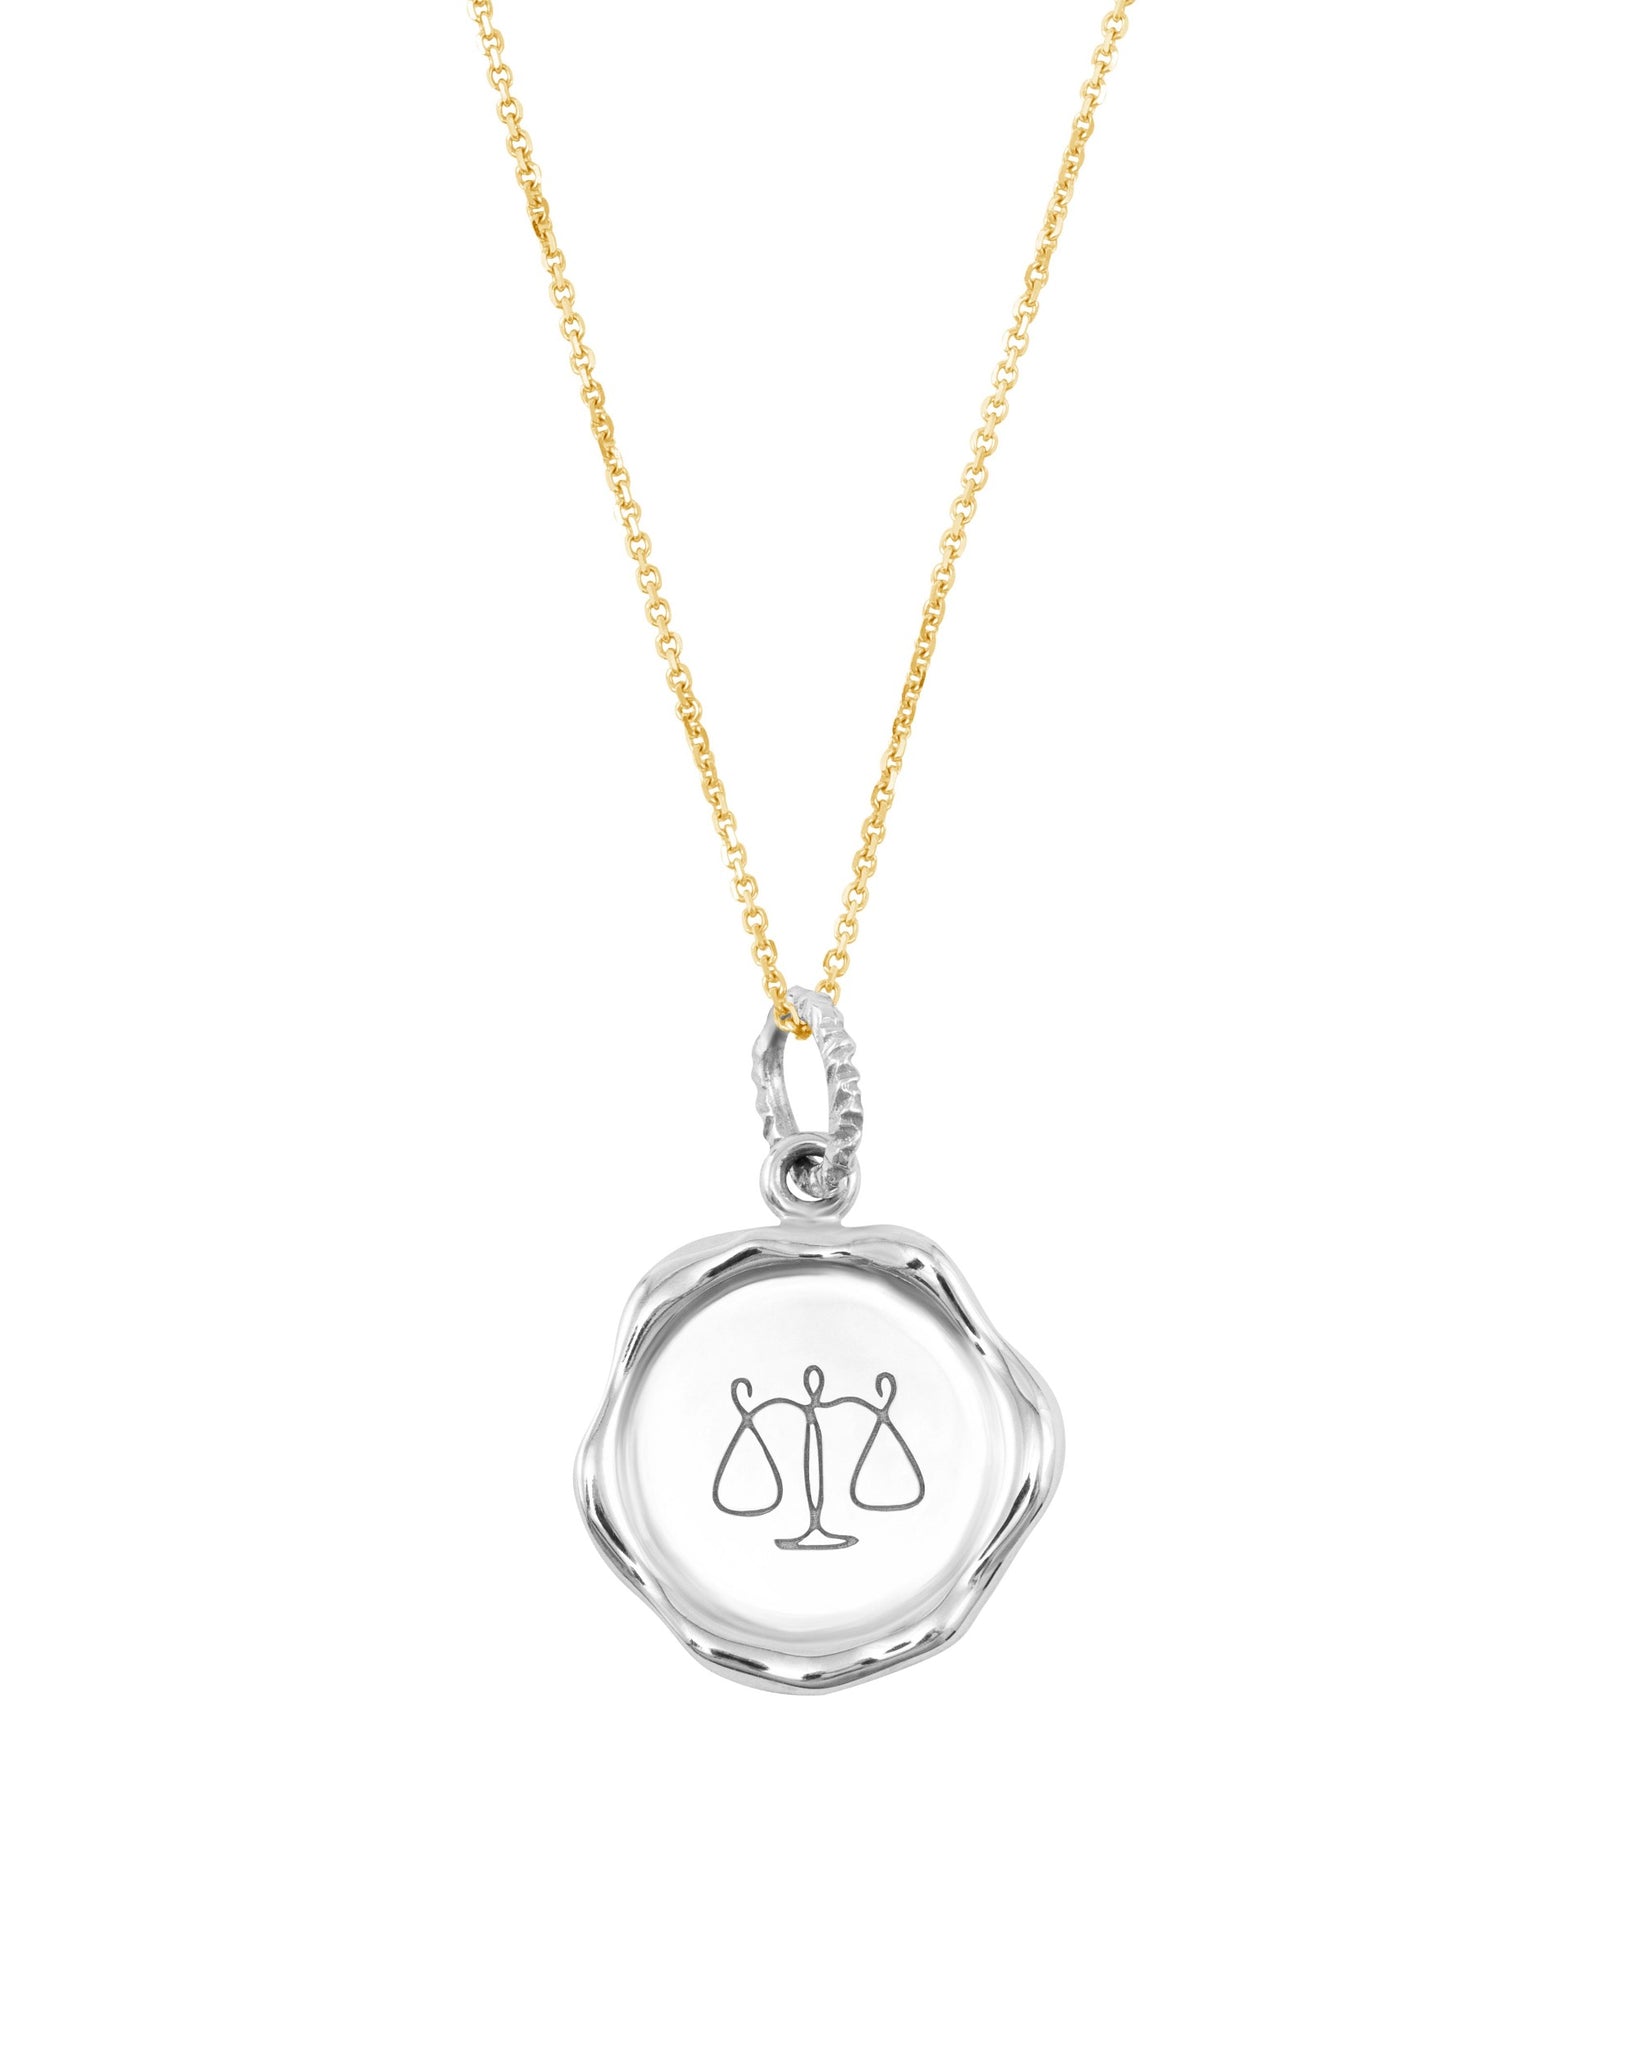 Zodiac Libra necklace